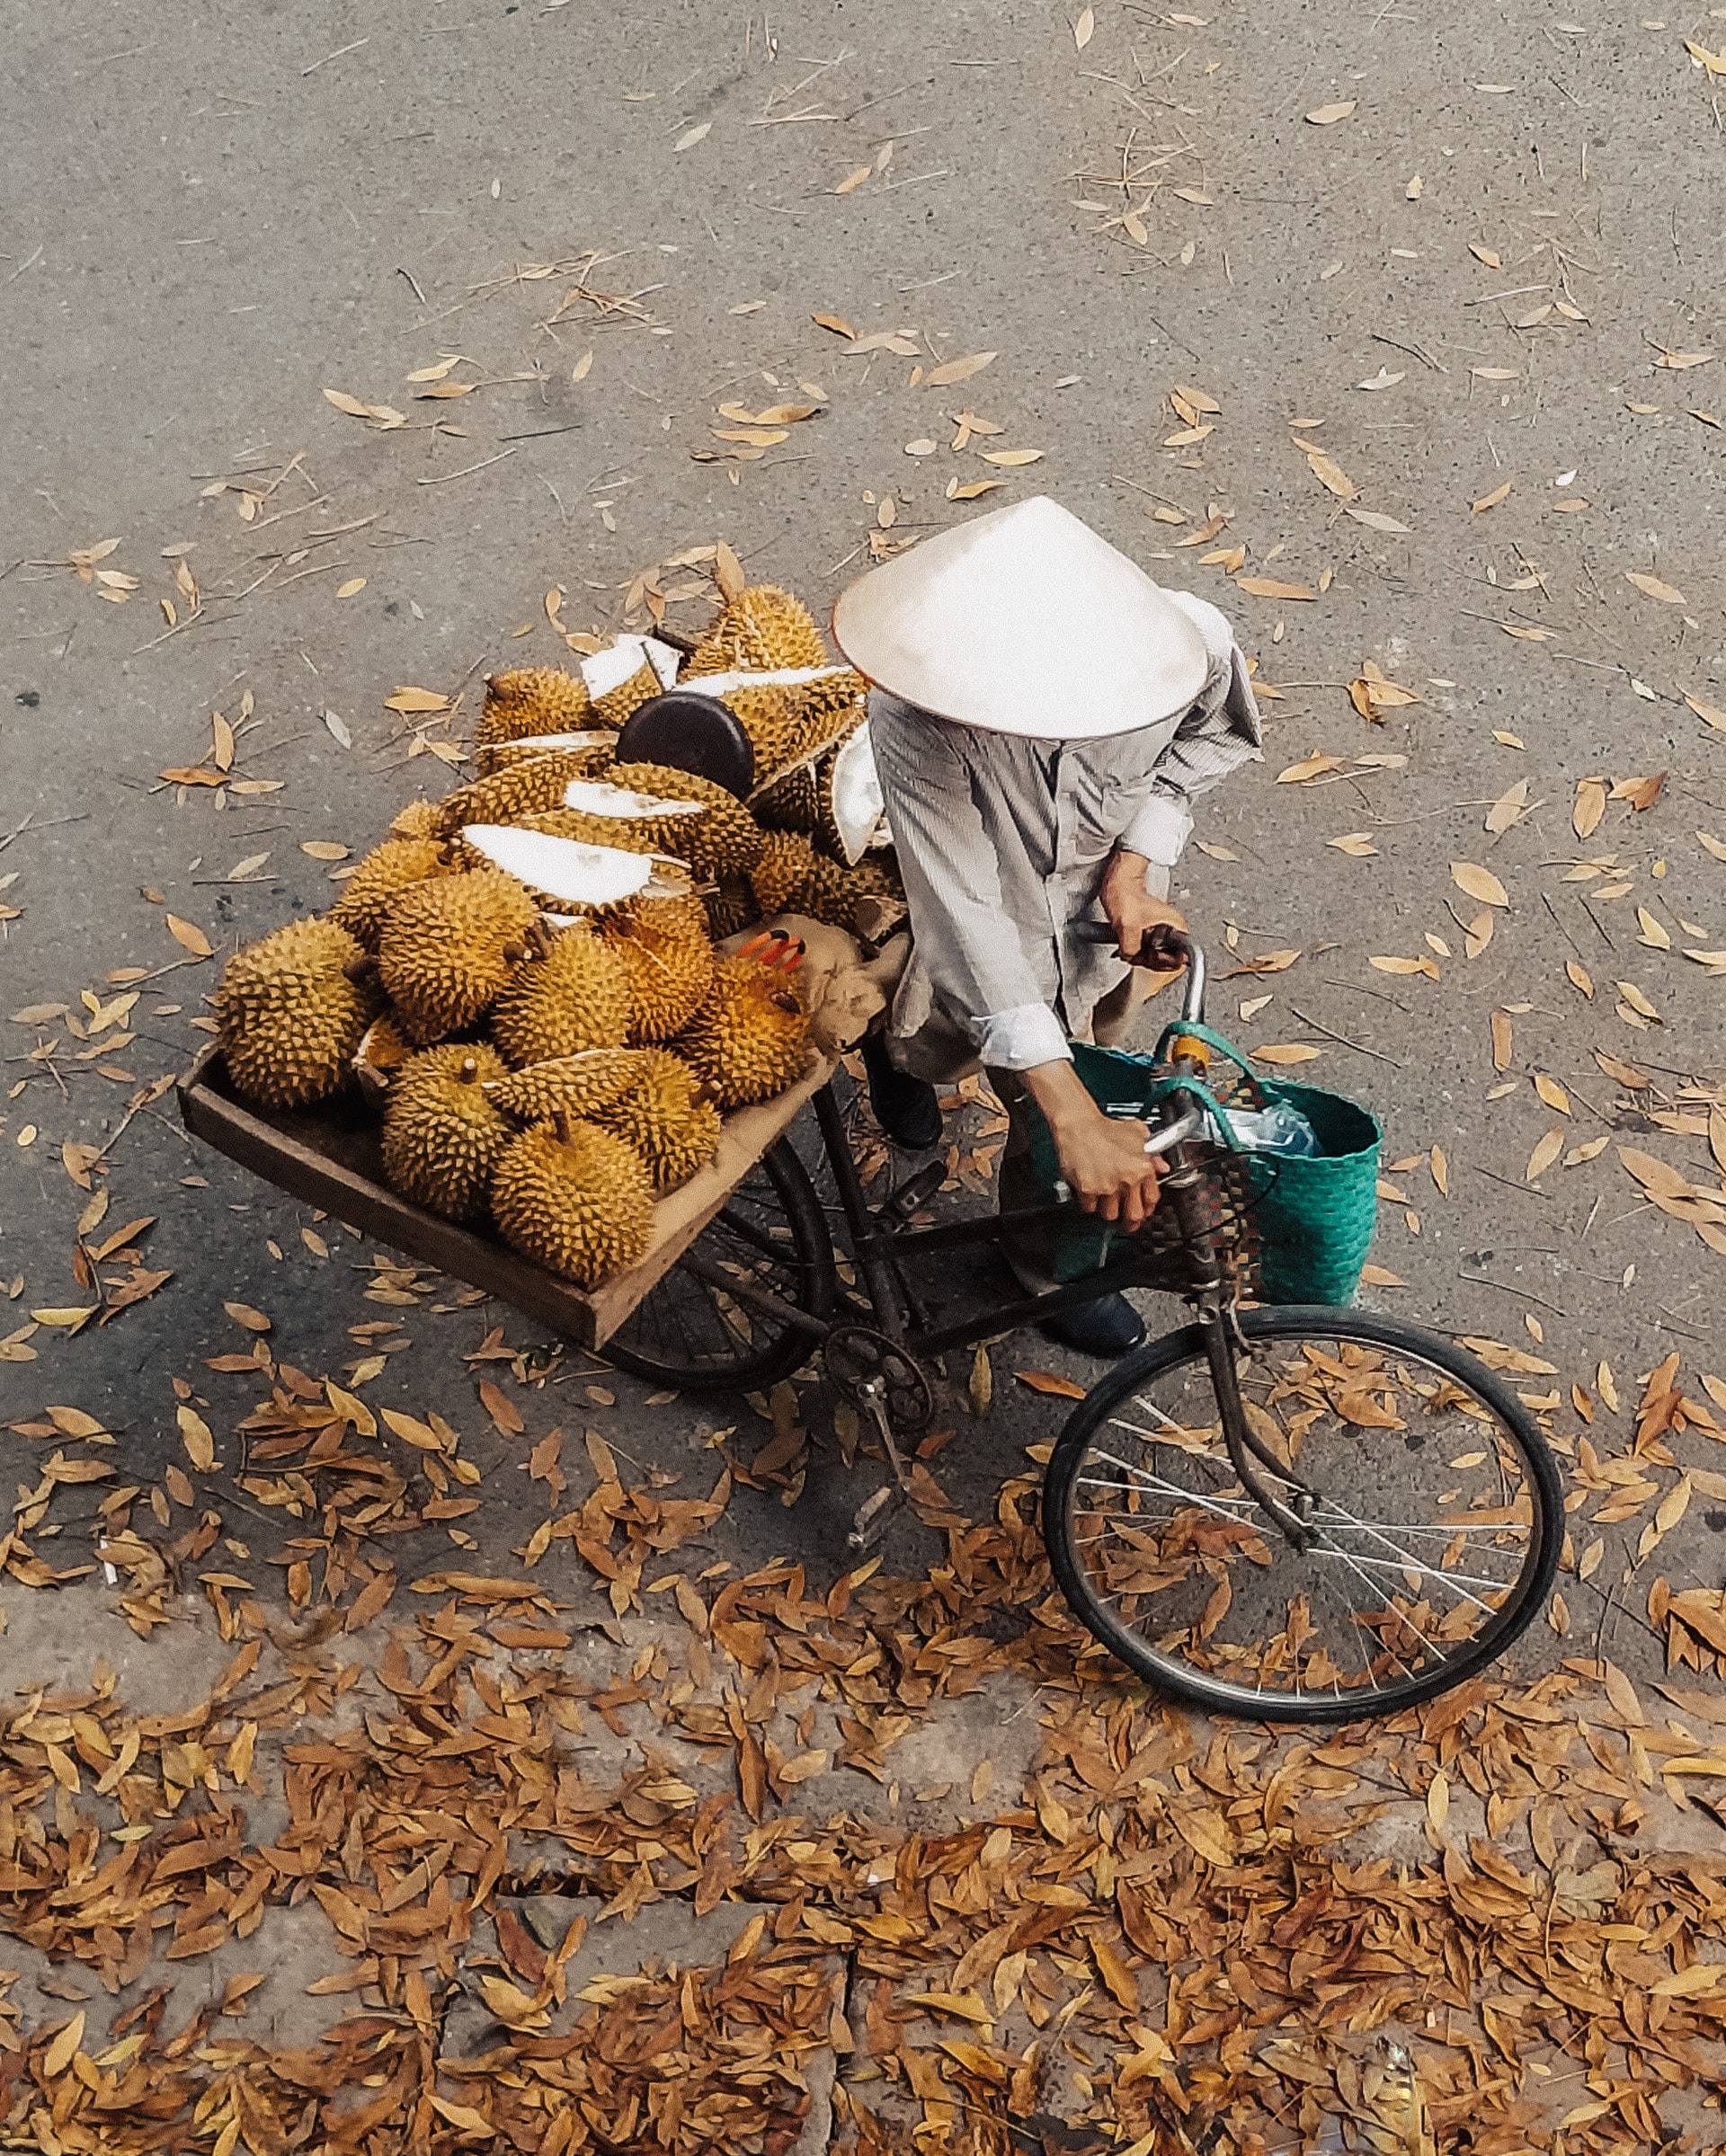 durian farmer